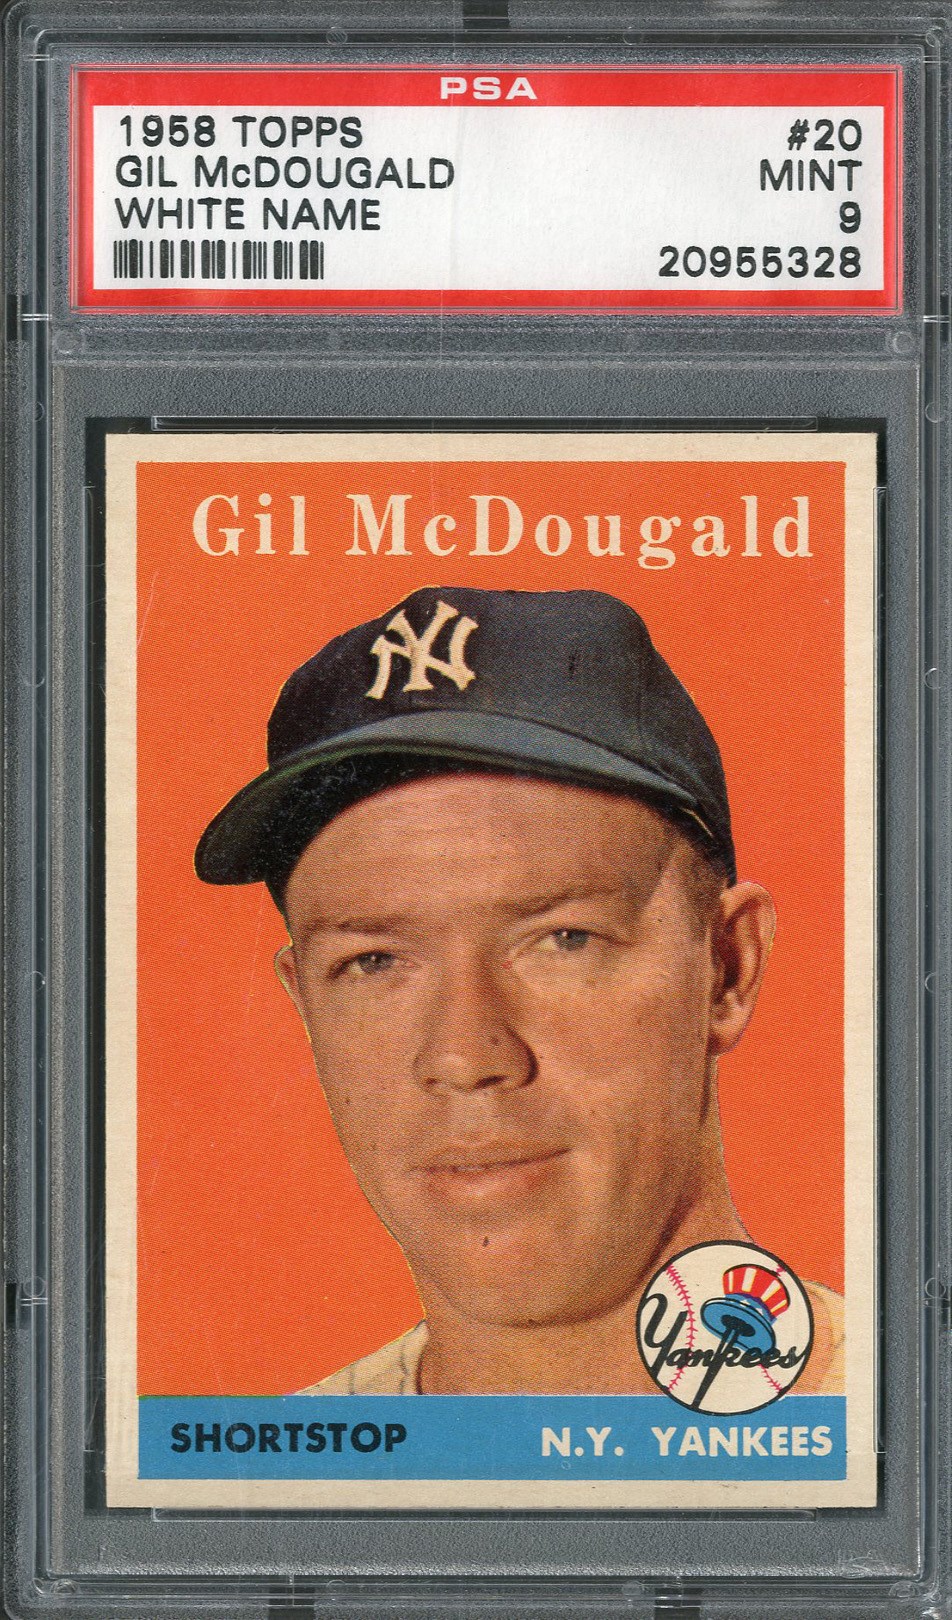 Baseball and Trading Cards - 1958 Topps #20 Gil McDougald (White Name) PSA MINT 9